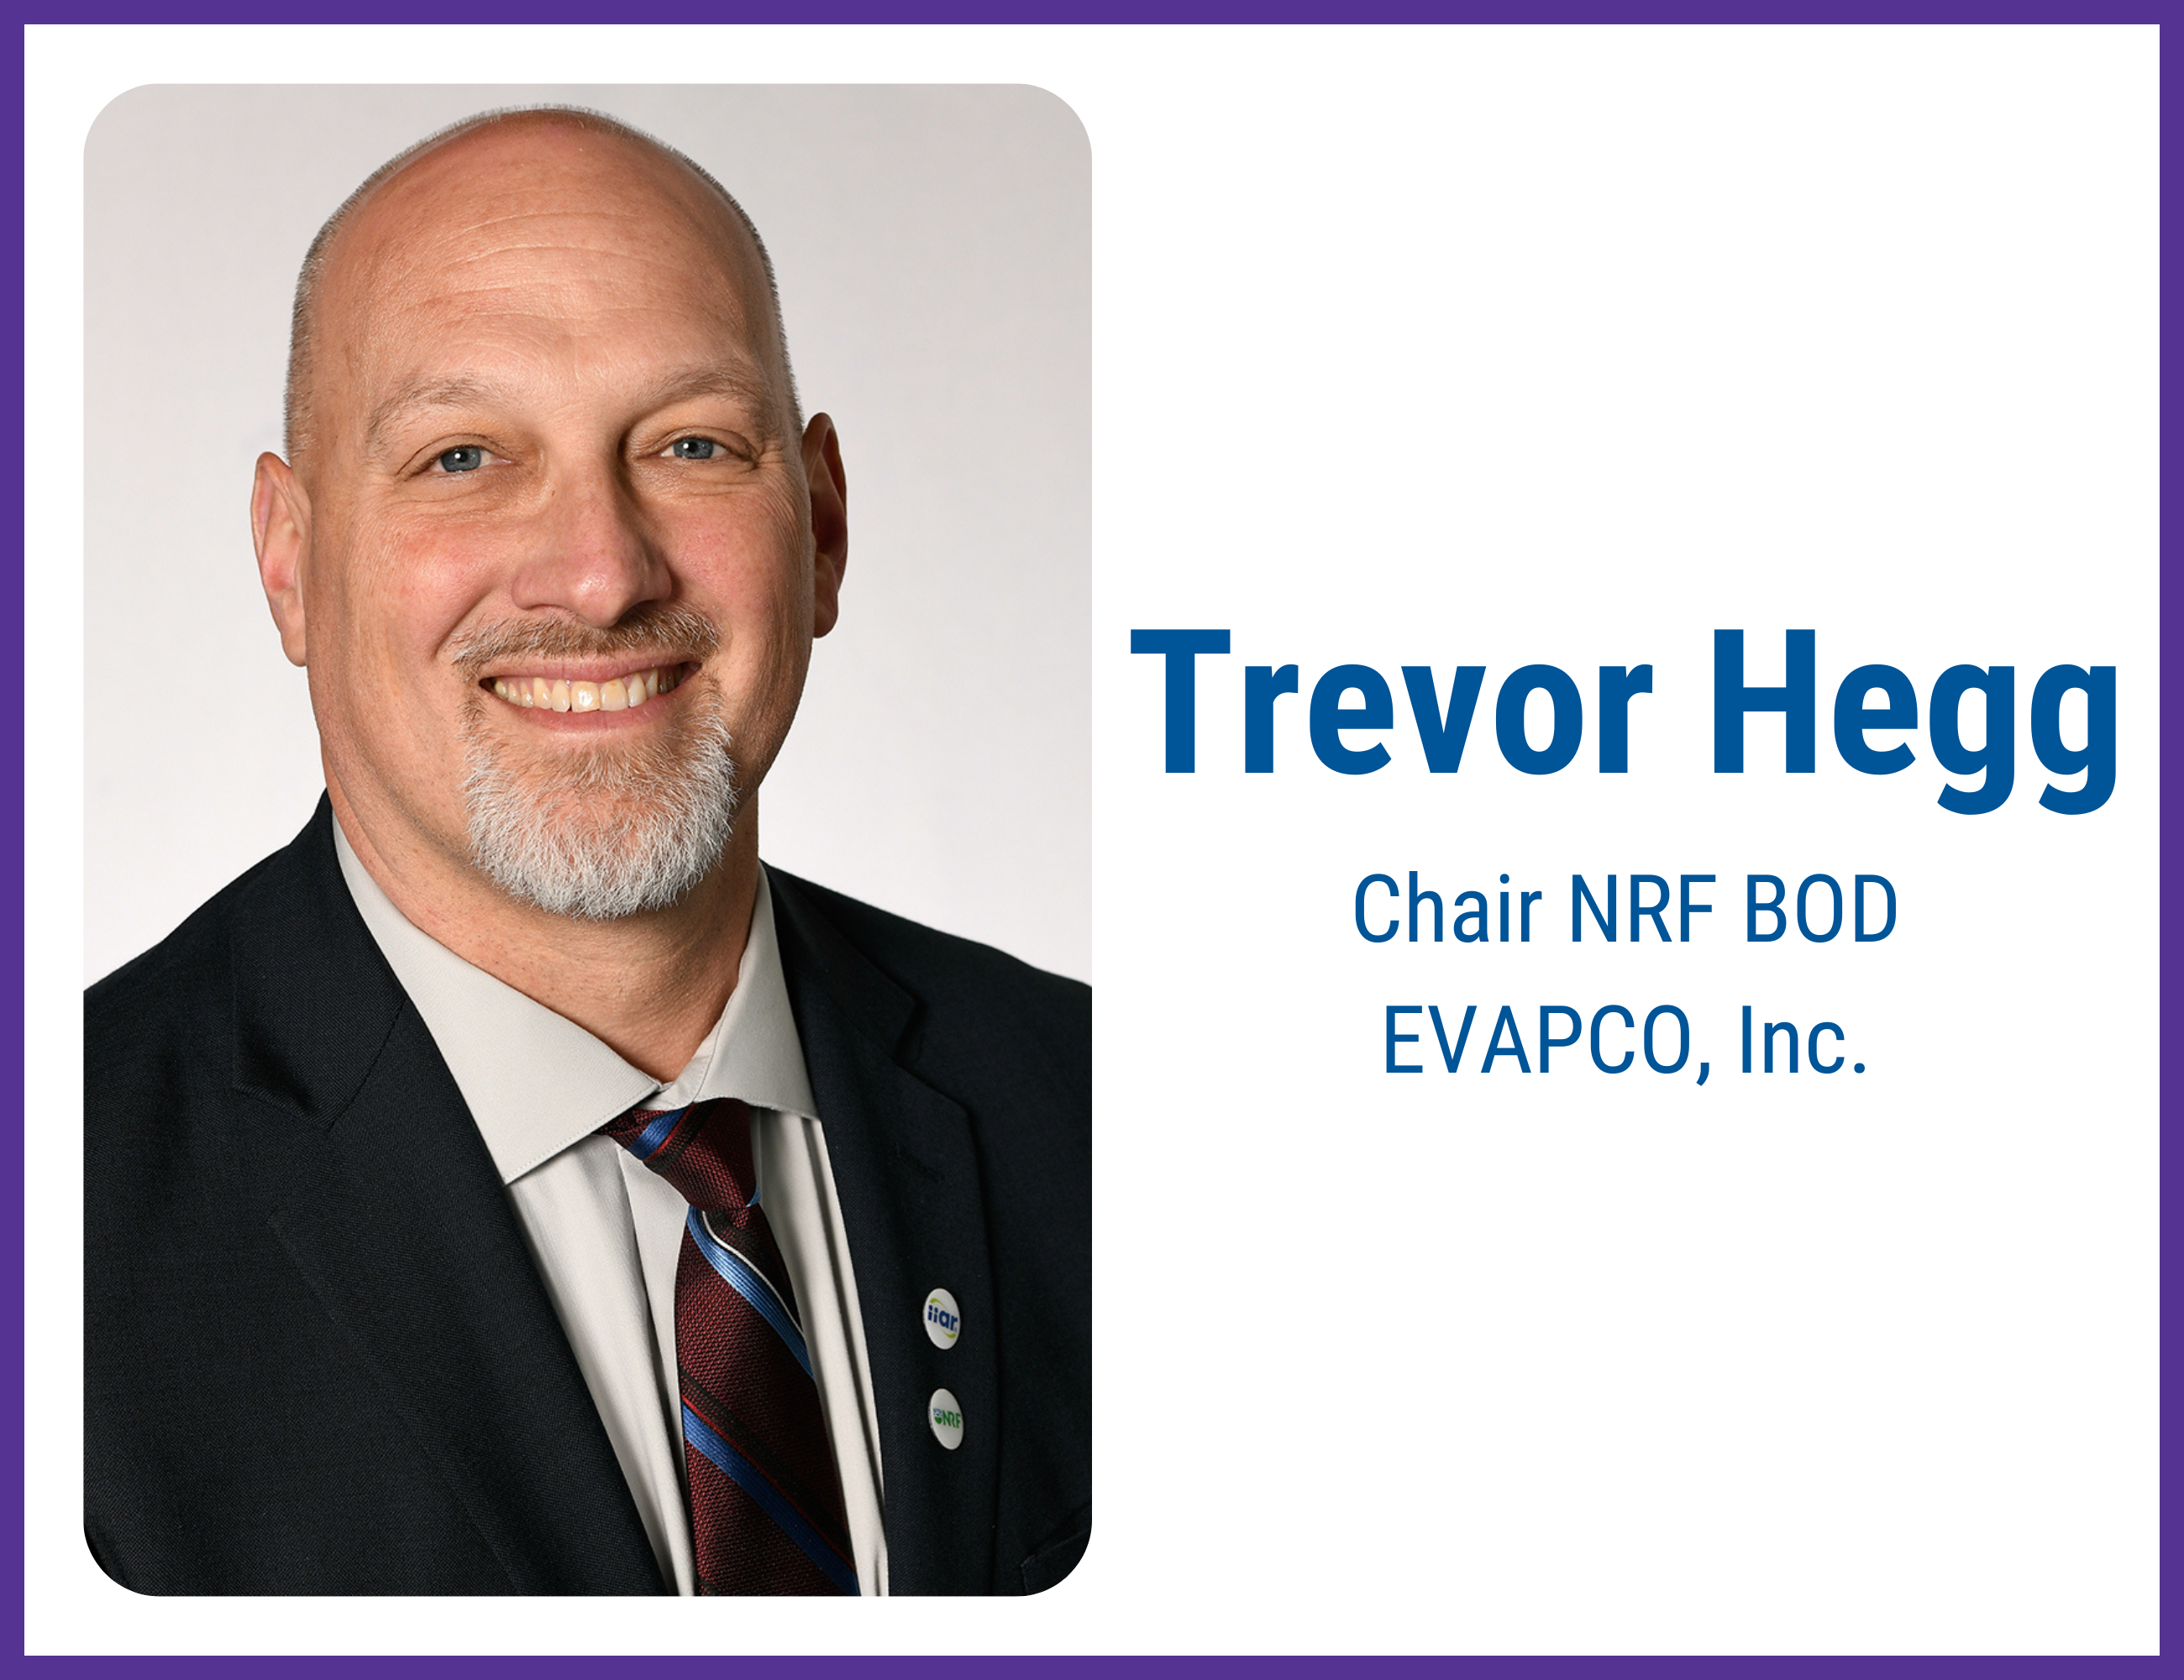 NRF Board Director Trevor Hegg